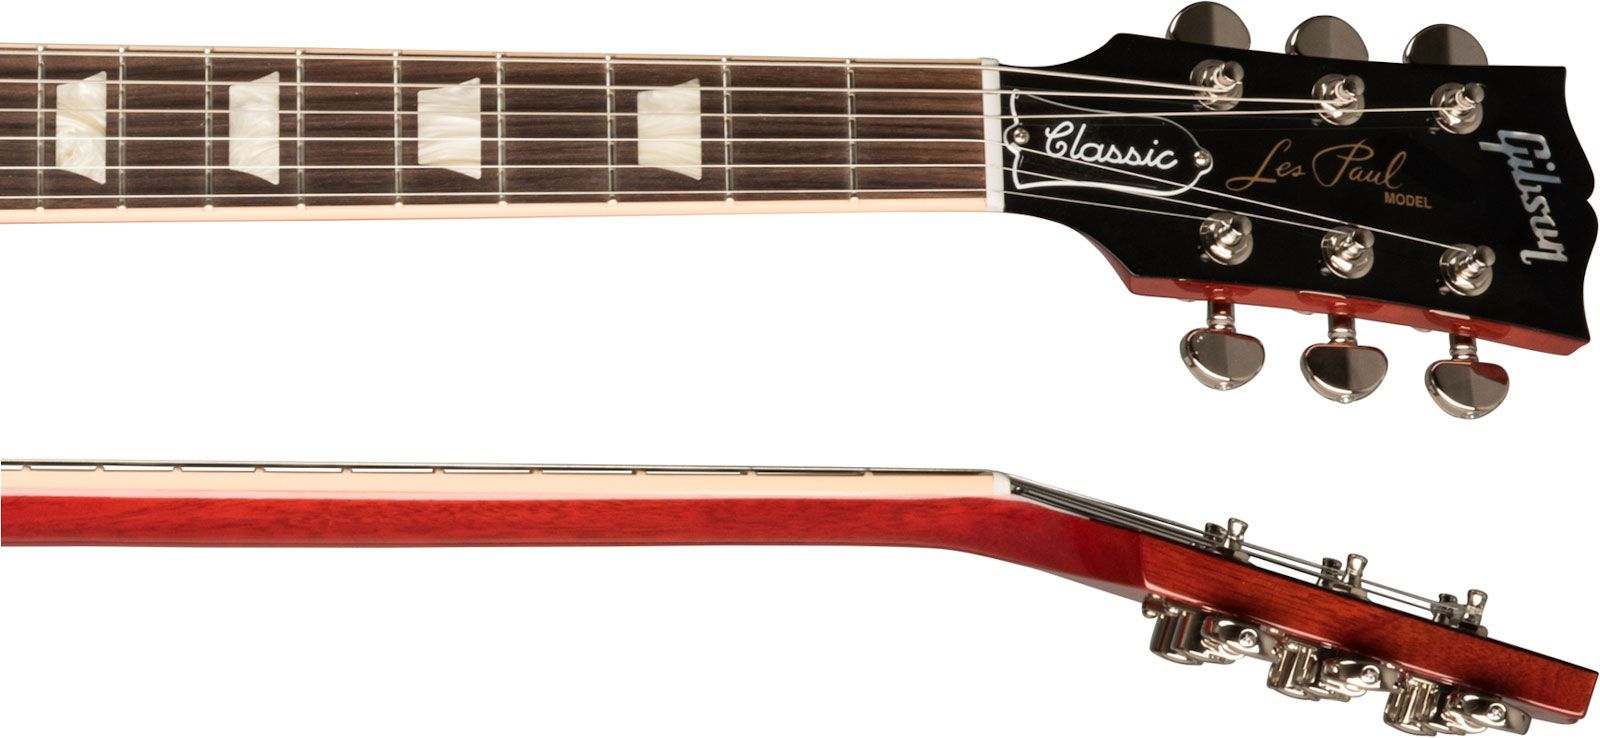 Gibson Les Paul Classic Modern 2h Ht Rw - Trans Cherry - Enkel gesneden elektrische gitaar - Variation 3